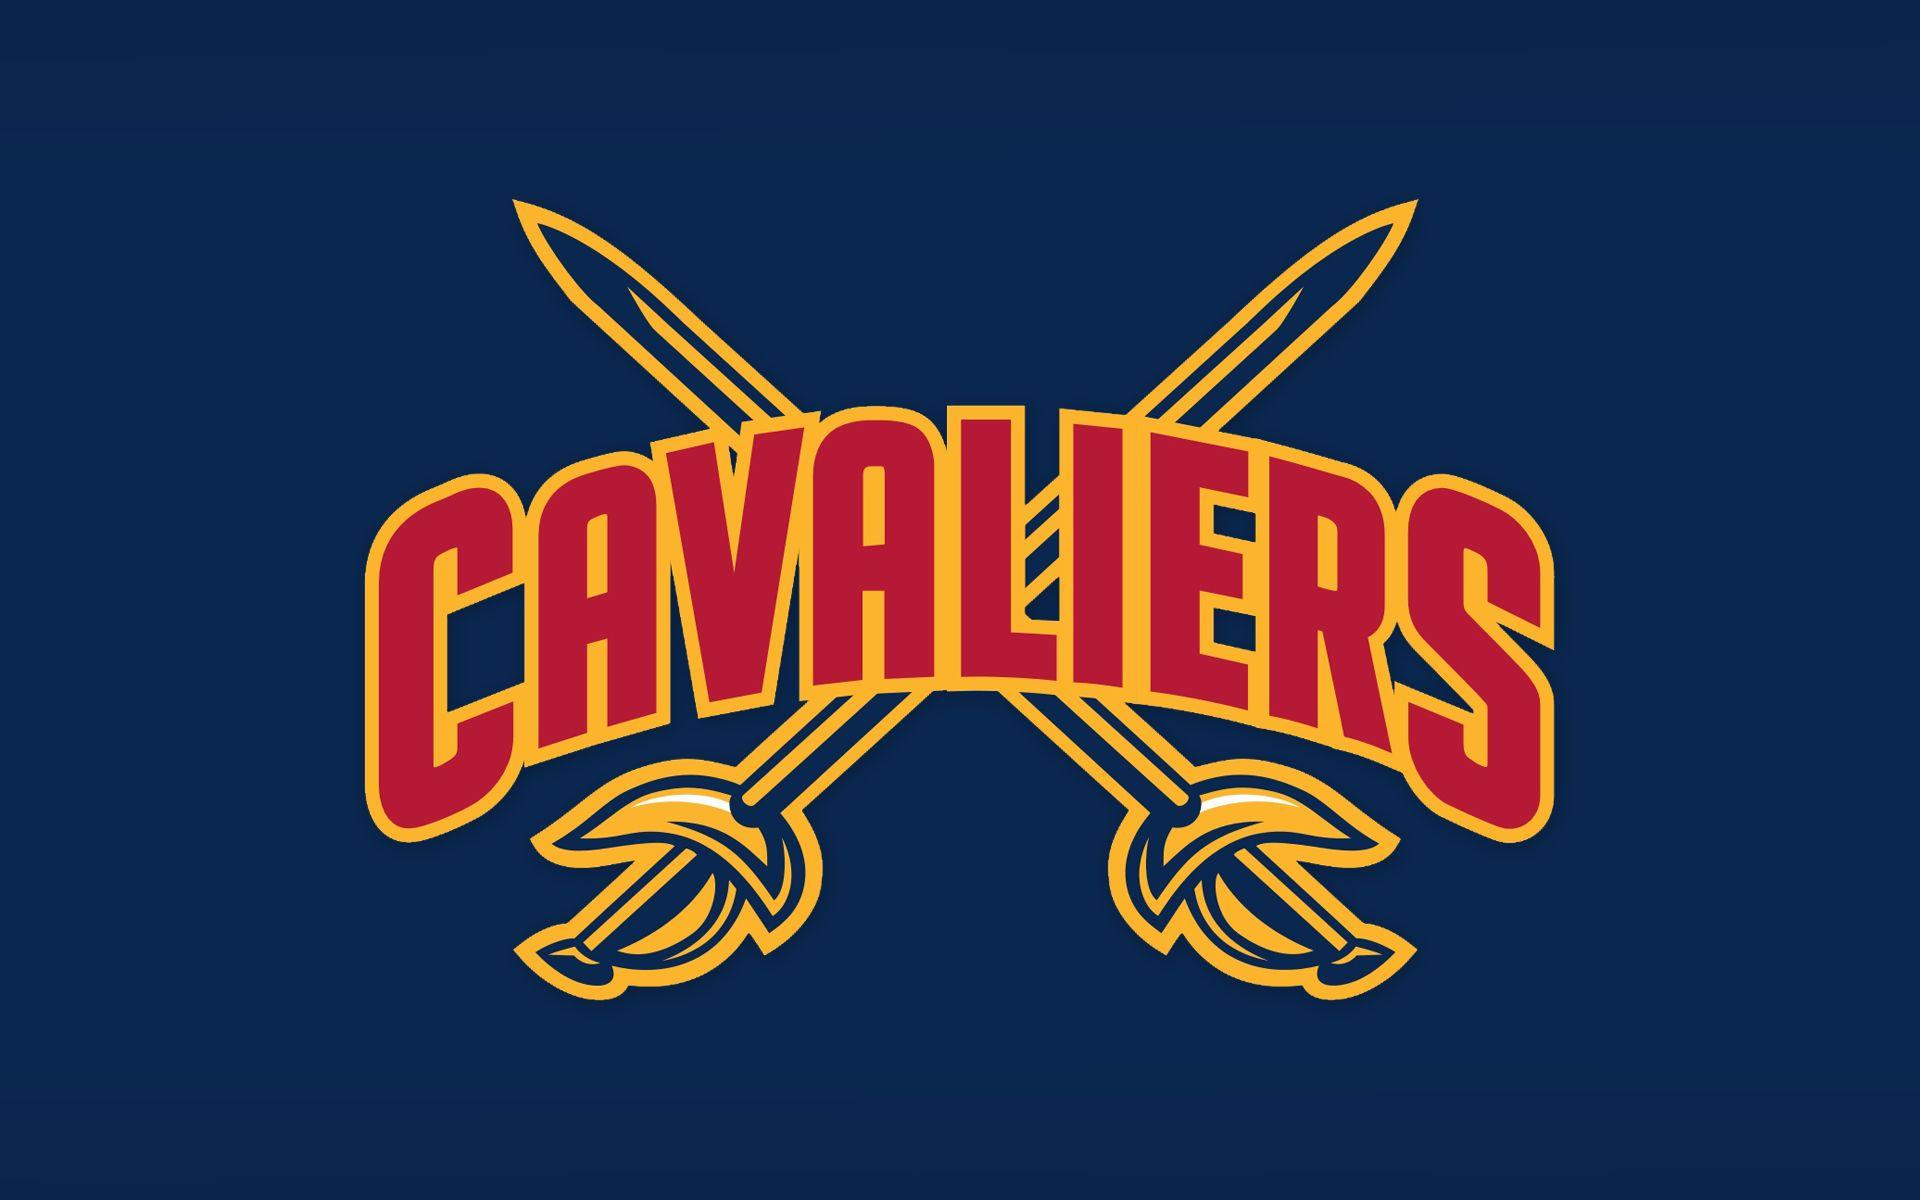 Cleveland Cavaliers Logo Wallpaper Free Download. Wallpaper